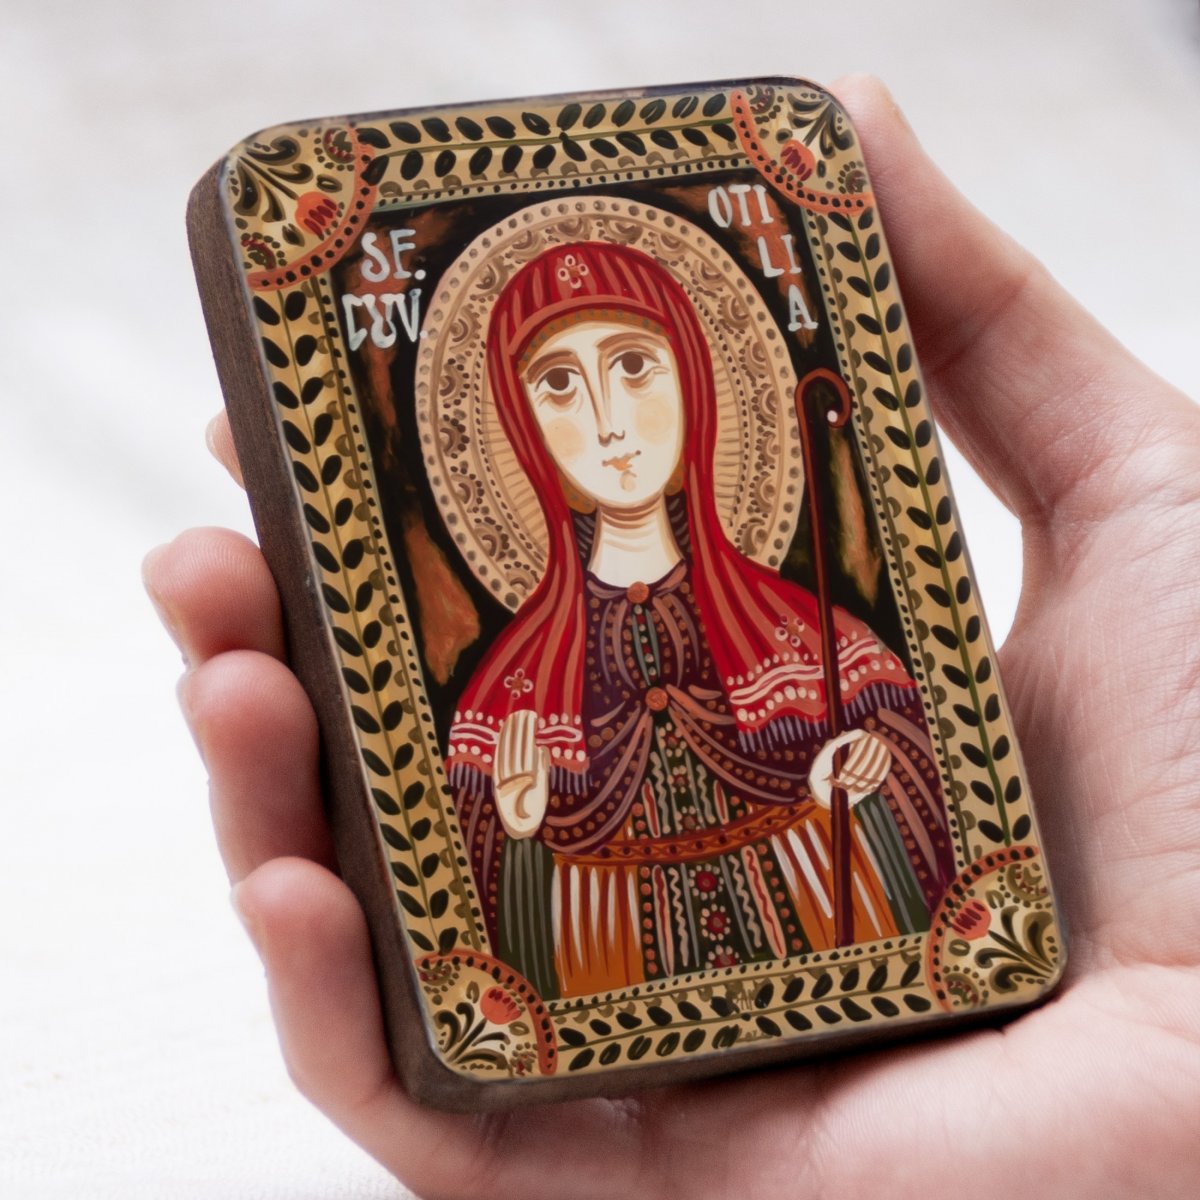 Wood icon, "Saint Odile of Alsace", miniature, 7x10cm